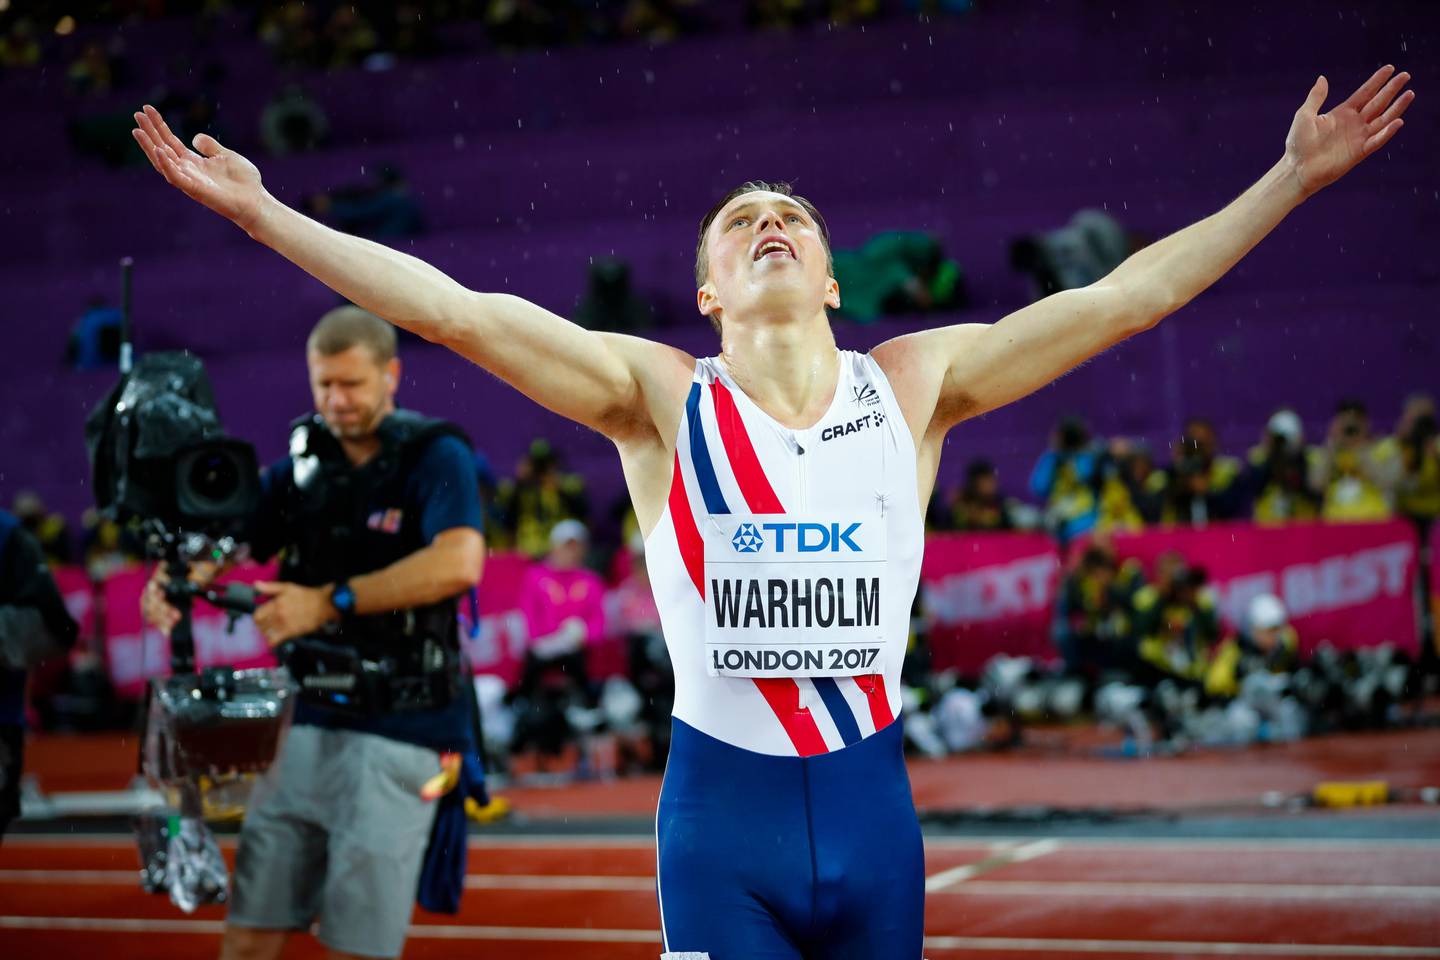 London, Storbritannia 20170809.
Karsten Warholm vant gull på 400 meter hekk finalen i friidretts VM onsdag kveld. 
Foto: Heiko Junge / NTB scanpix